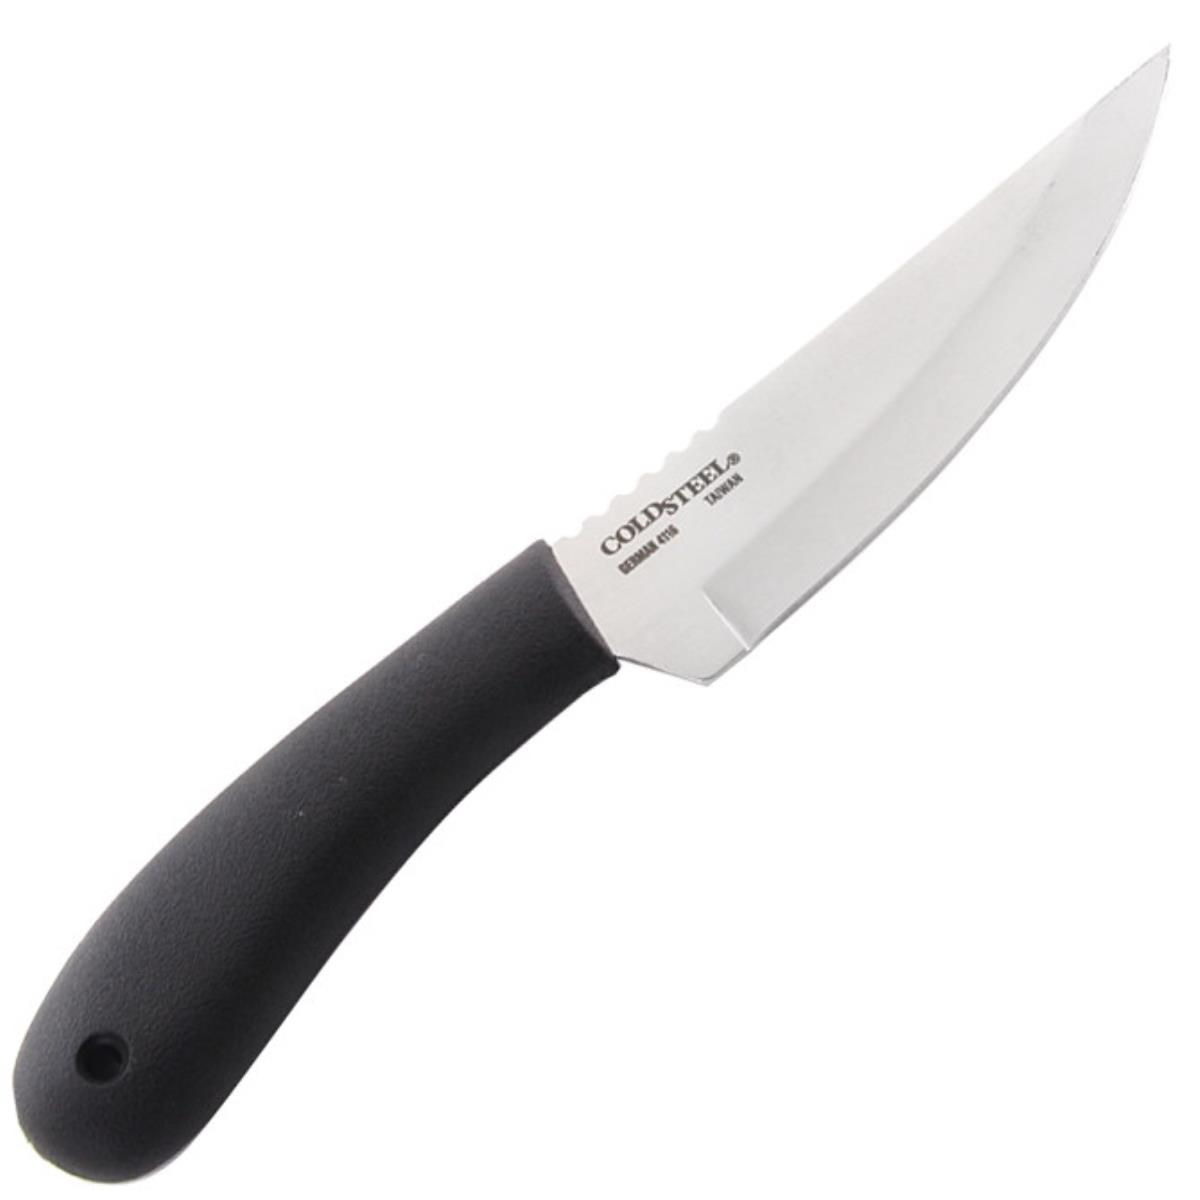 Нож сталь 4116 German, ножны пластик 20RBC Roach Belly Cold Steel мачете fox 680 сталь 1 4116 bestar нейлон